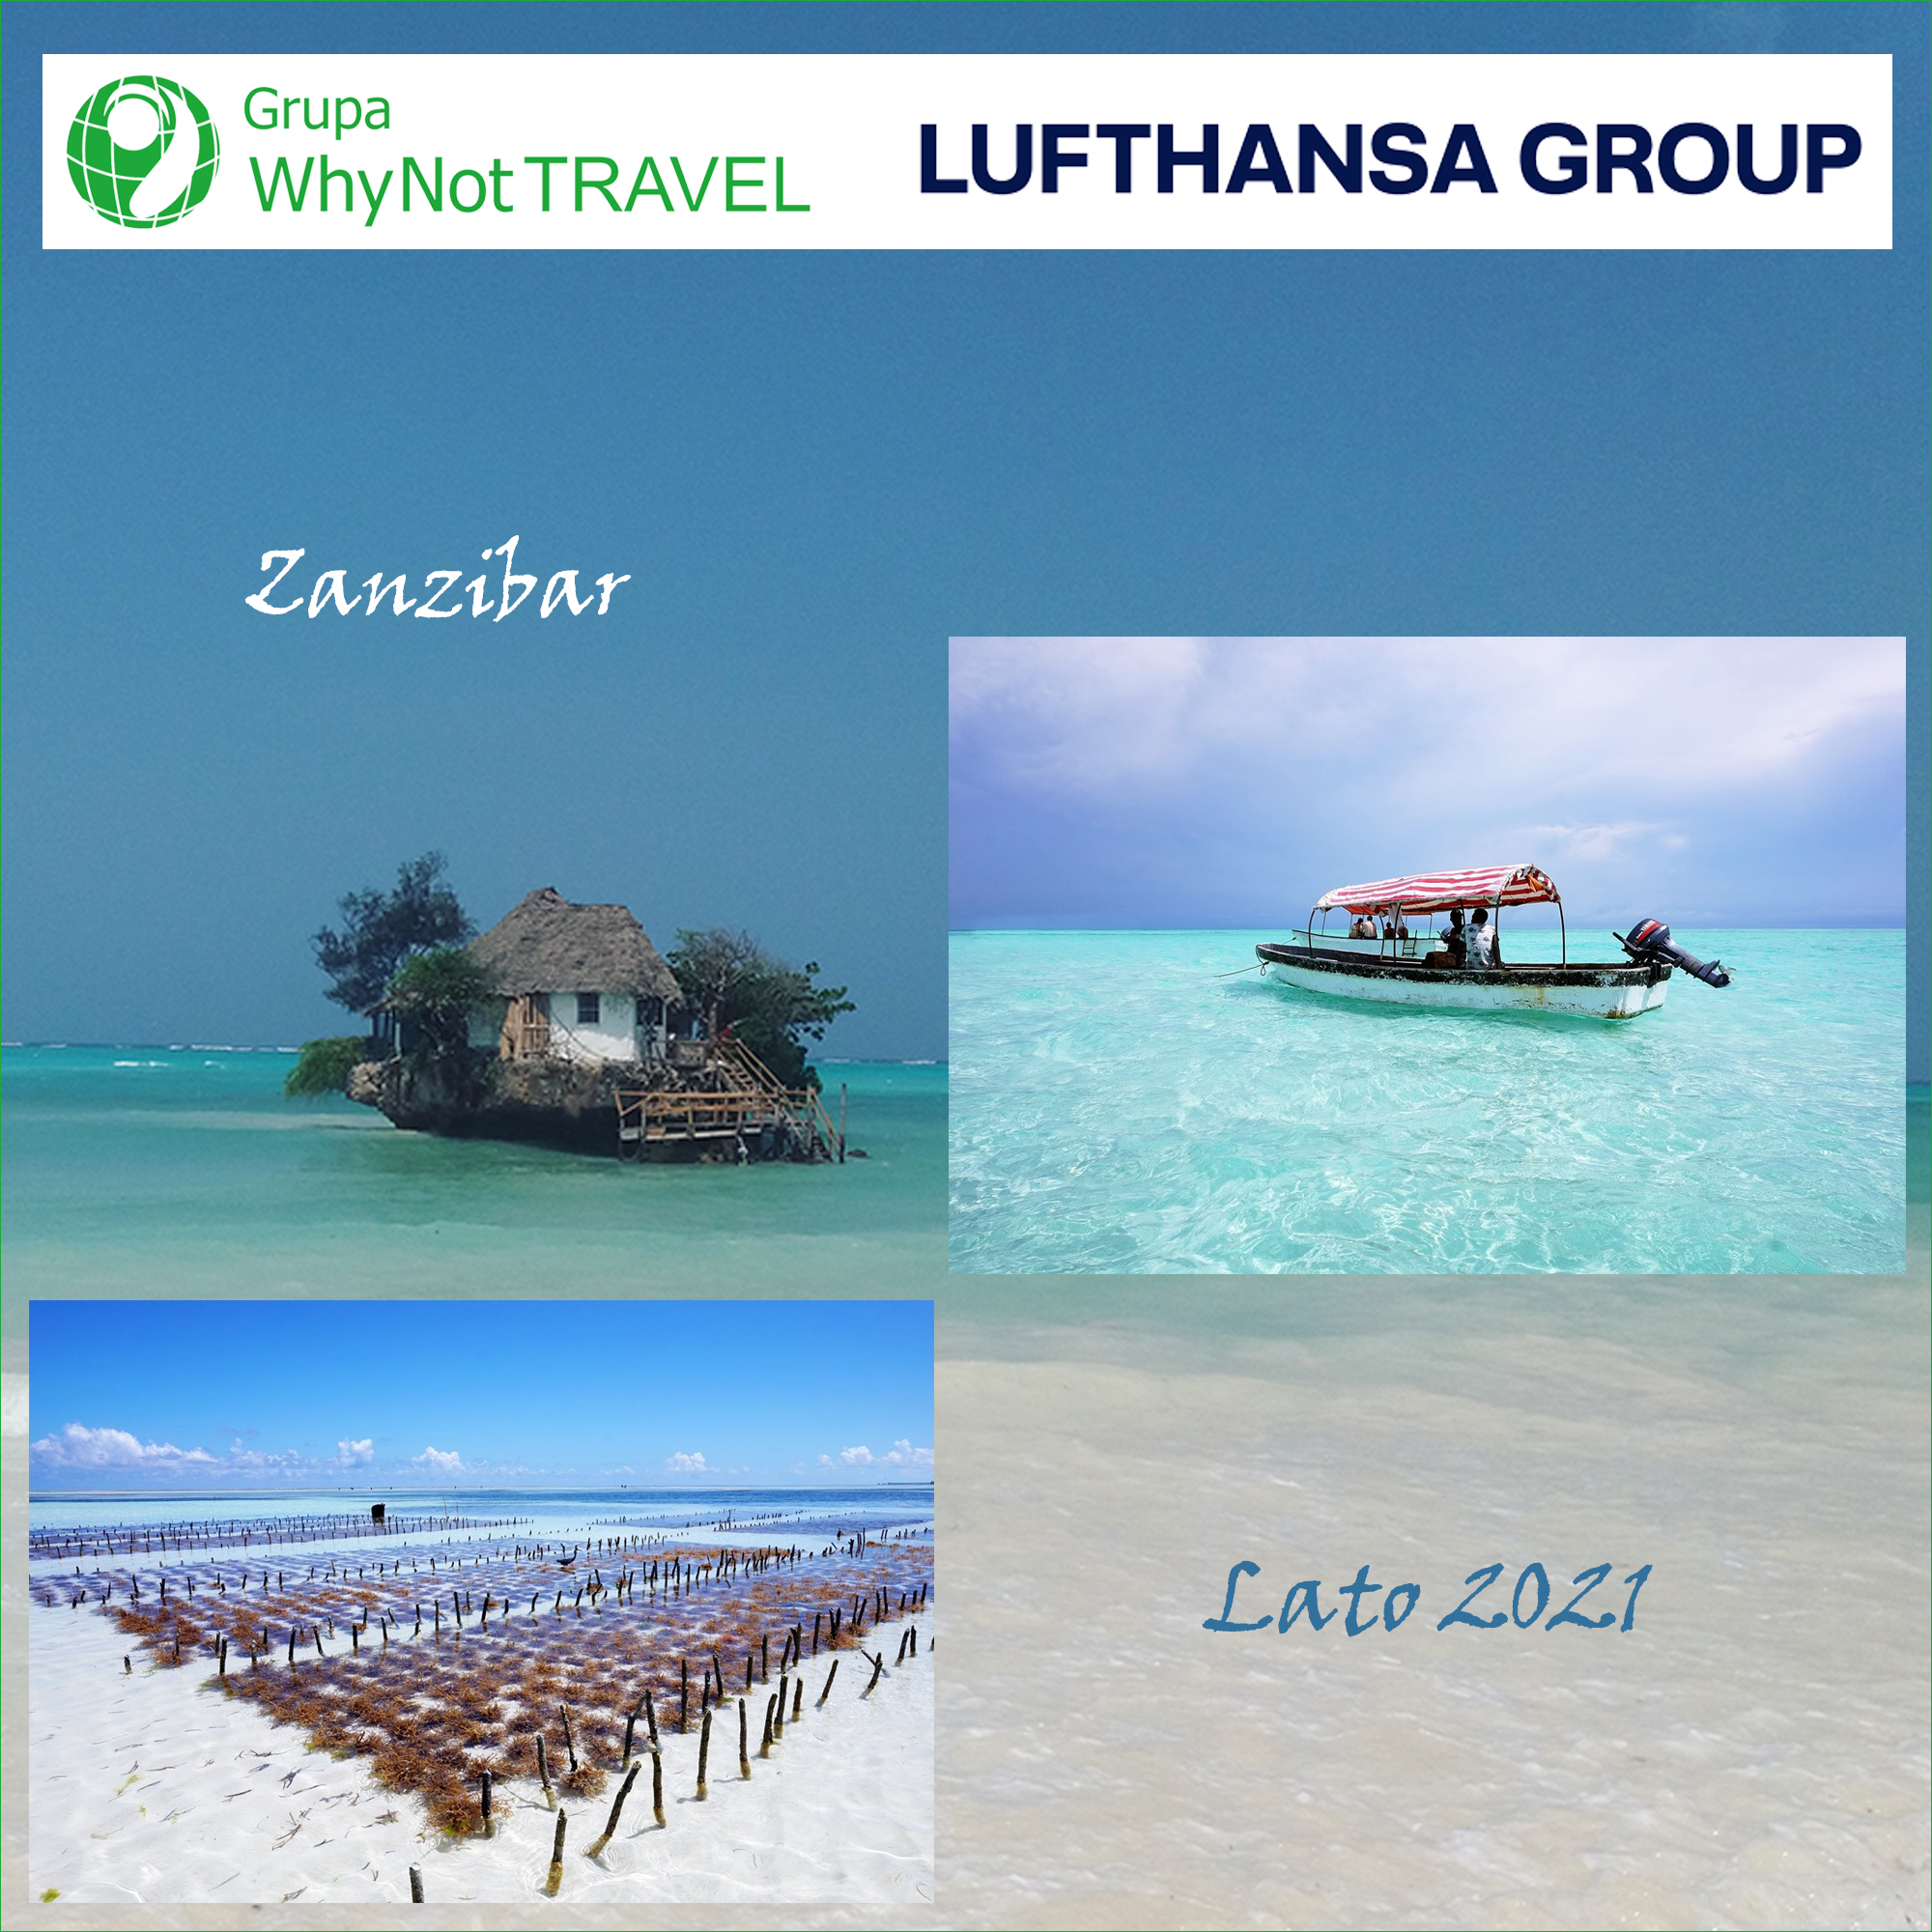 Lufthansa-Group – nowe-kierunki-turystyczne-na-lato-2021